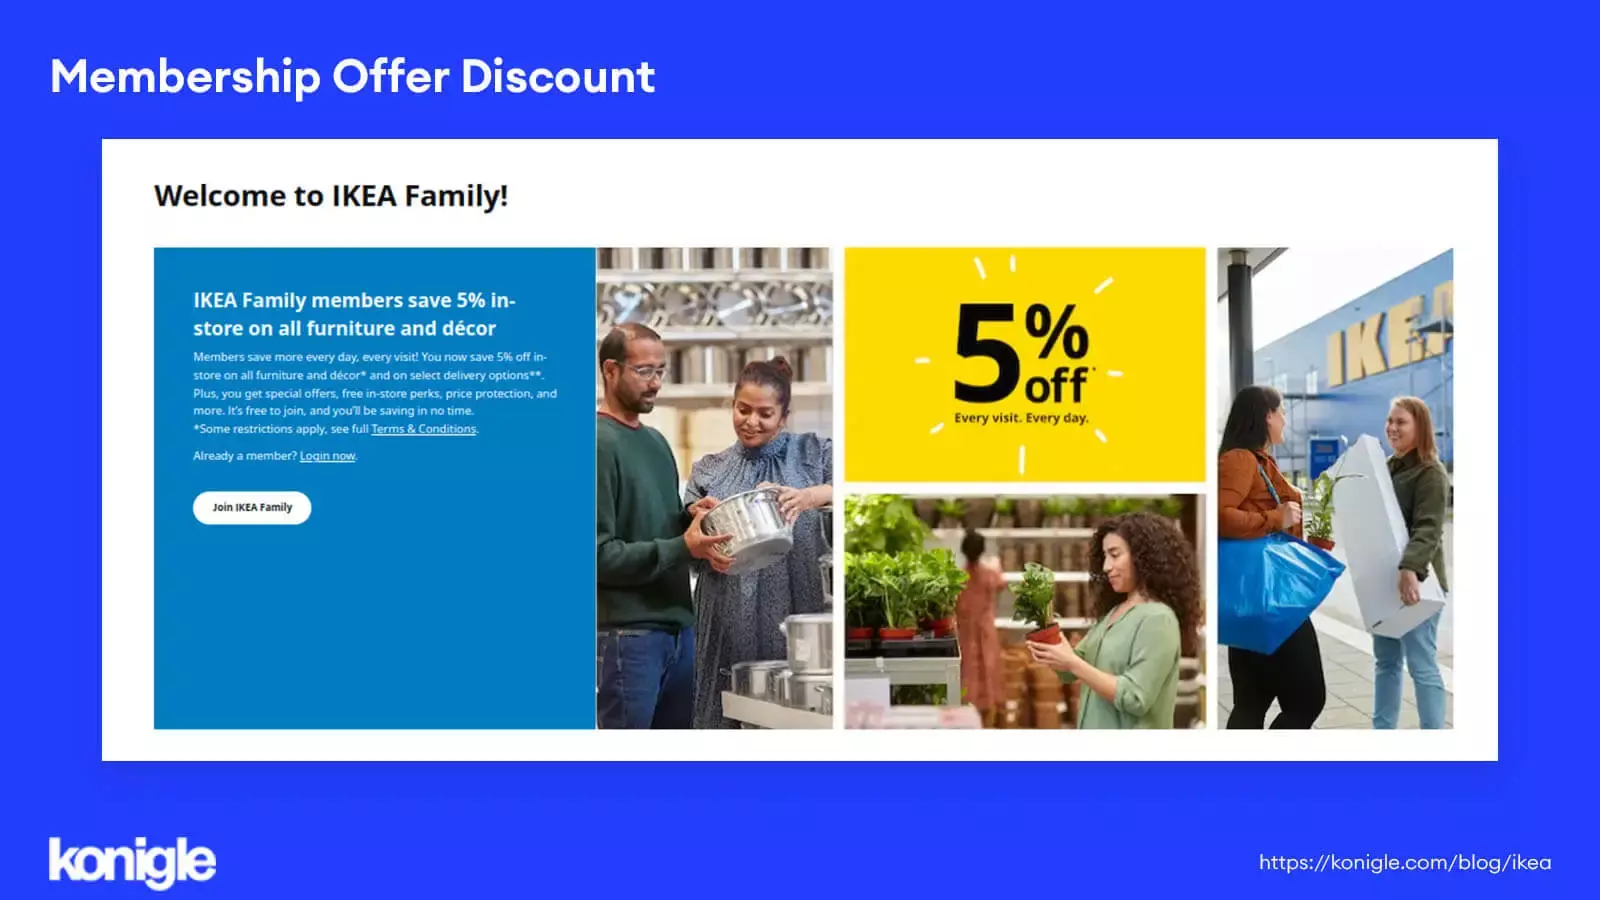 Ikea's website offers membership discounts to customers.